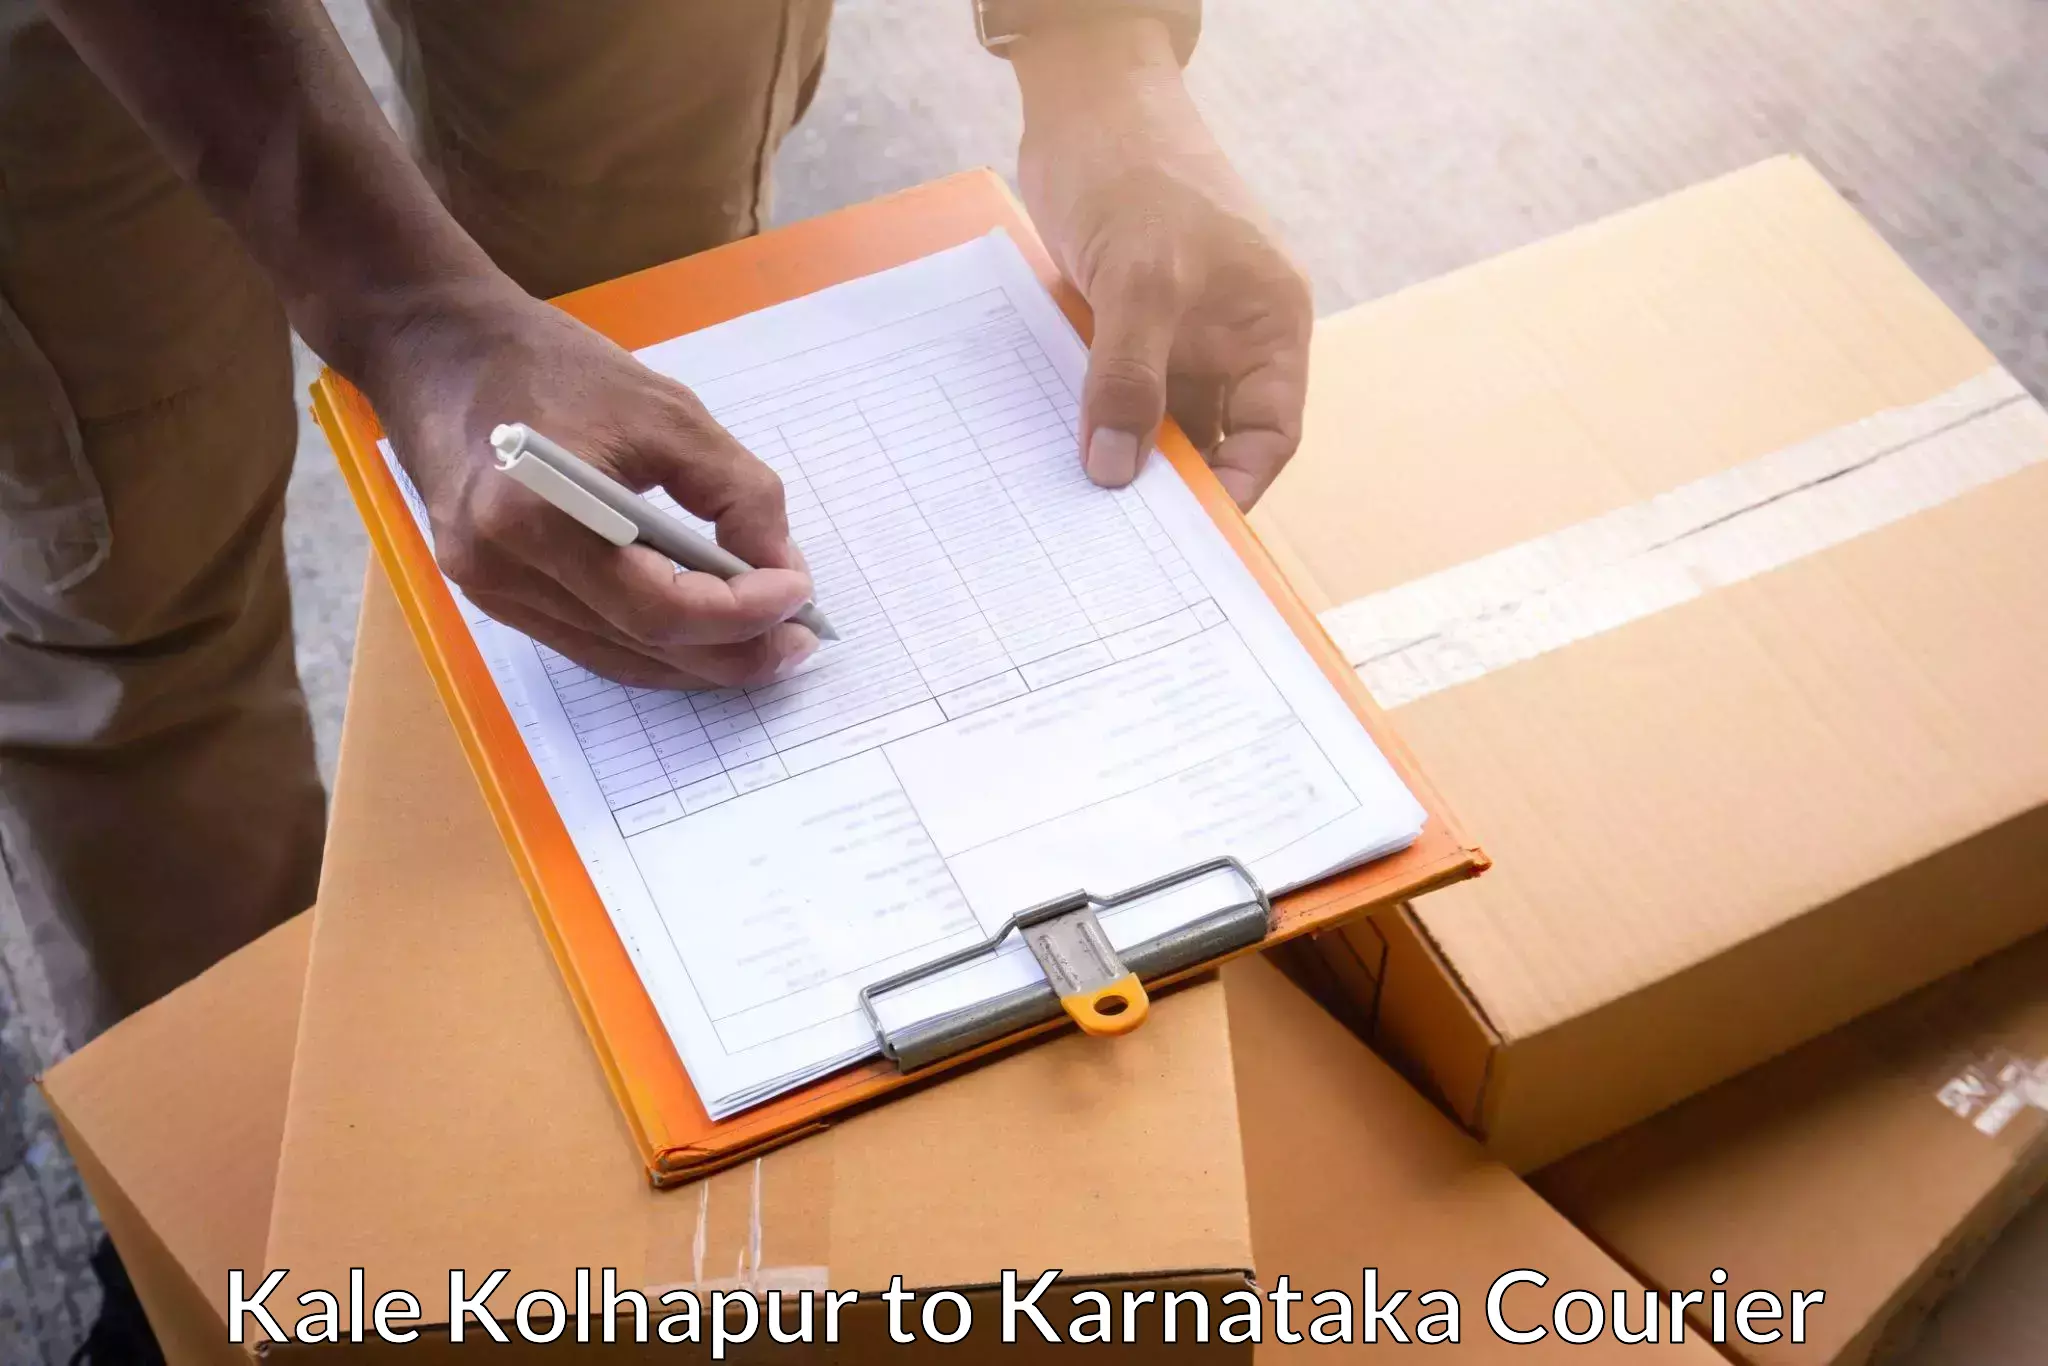 Efficient order fulfillment Kale Kolhapur to Navalgund